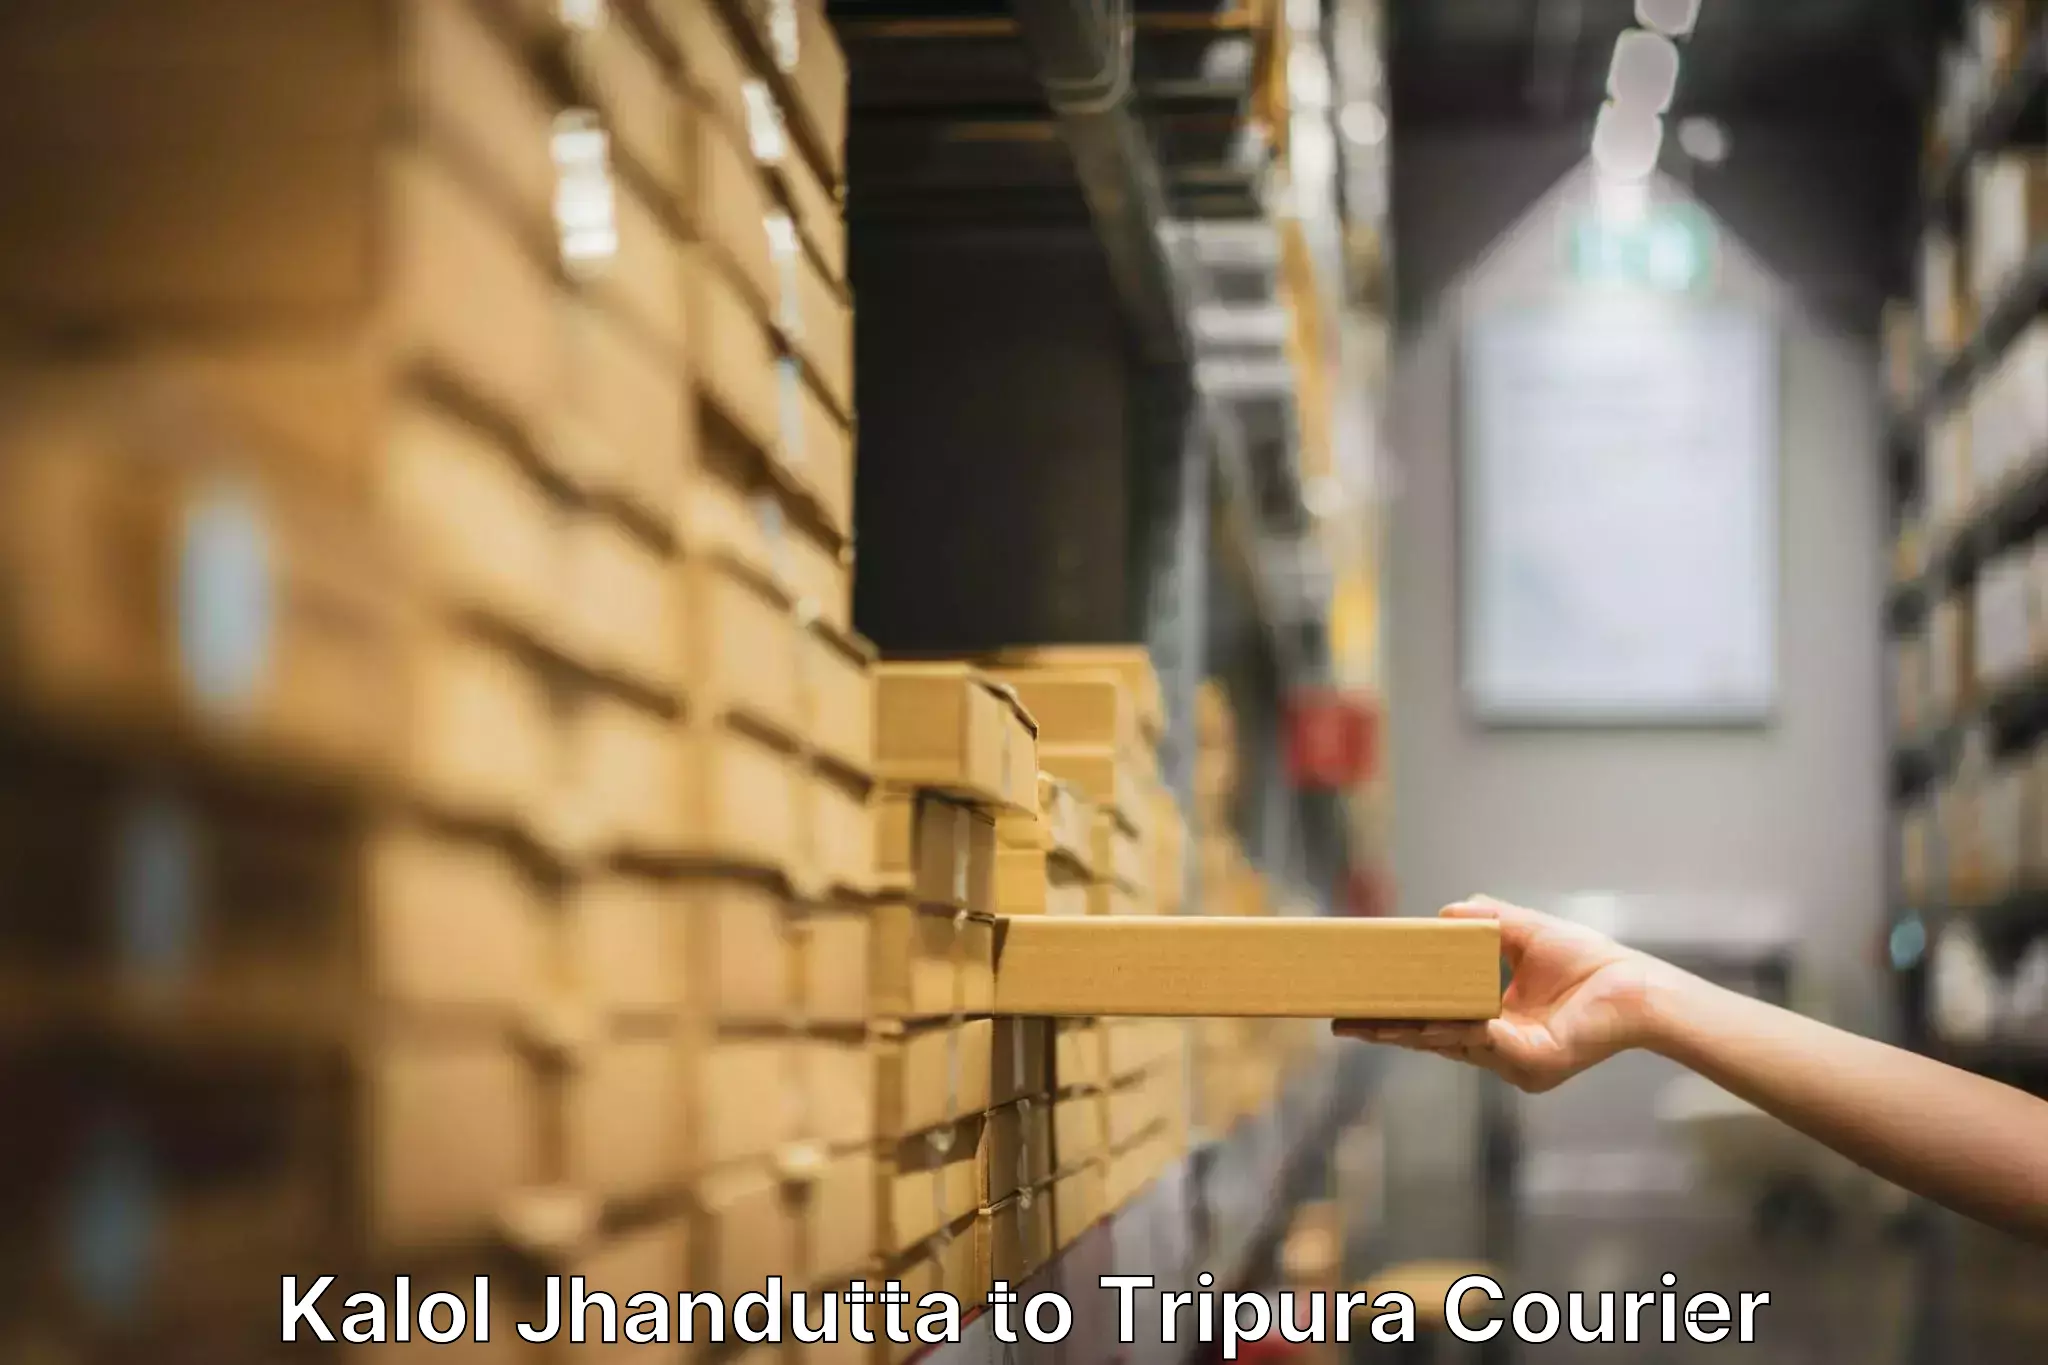 Professional furniture movers Kalol Jhandutta to North Tripura